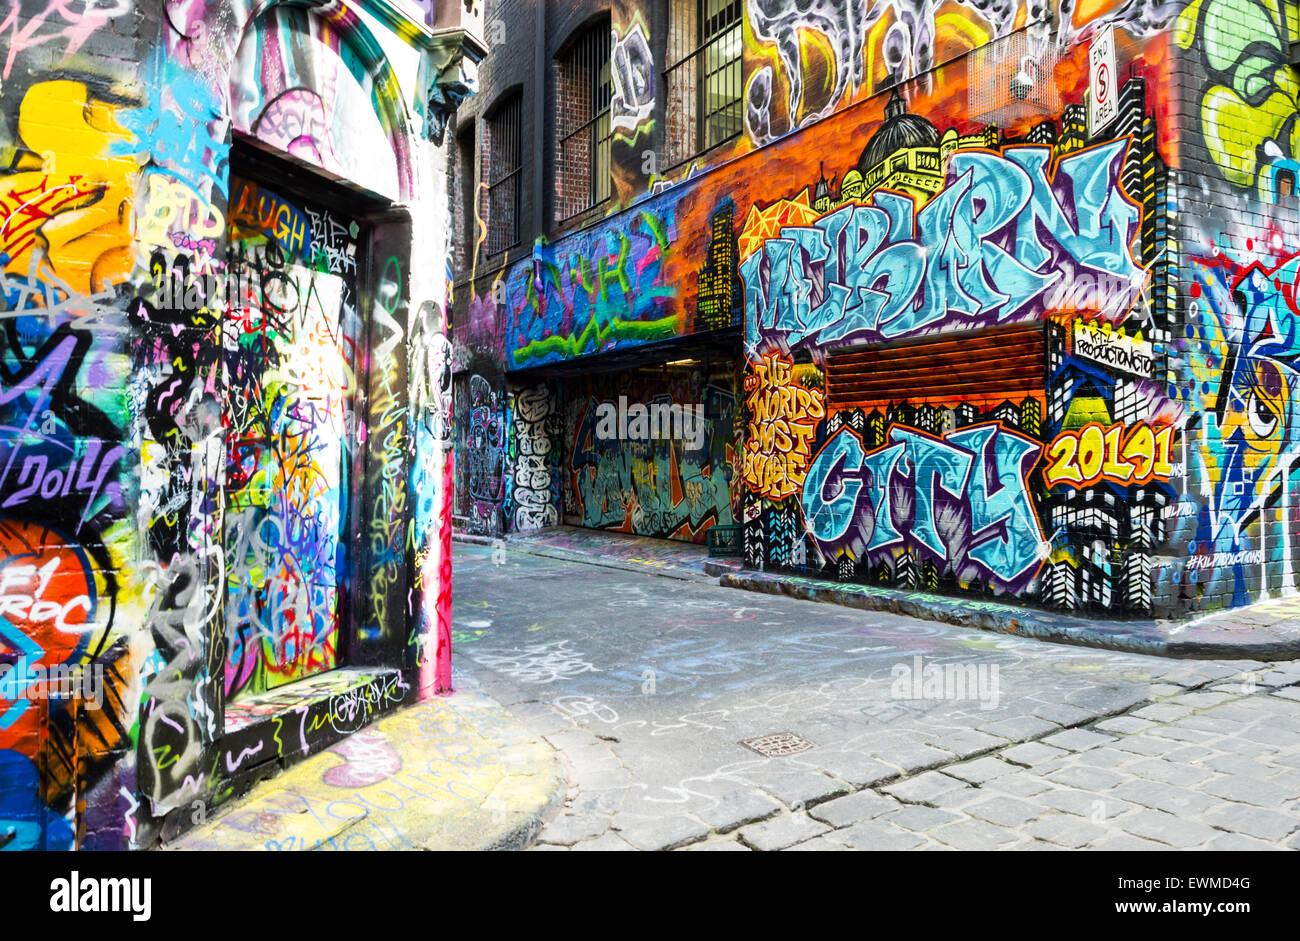 Australia, Melbourne, murals graffiti in the famous Hosier Lane in the city center Stock Photo